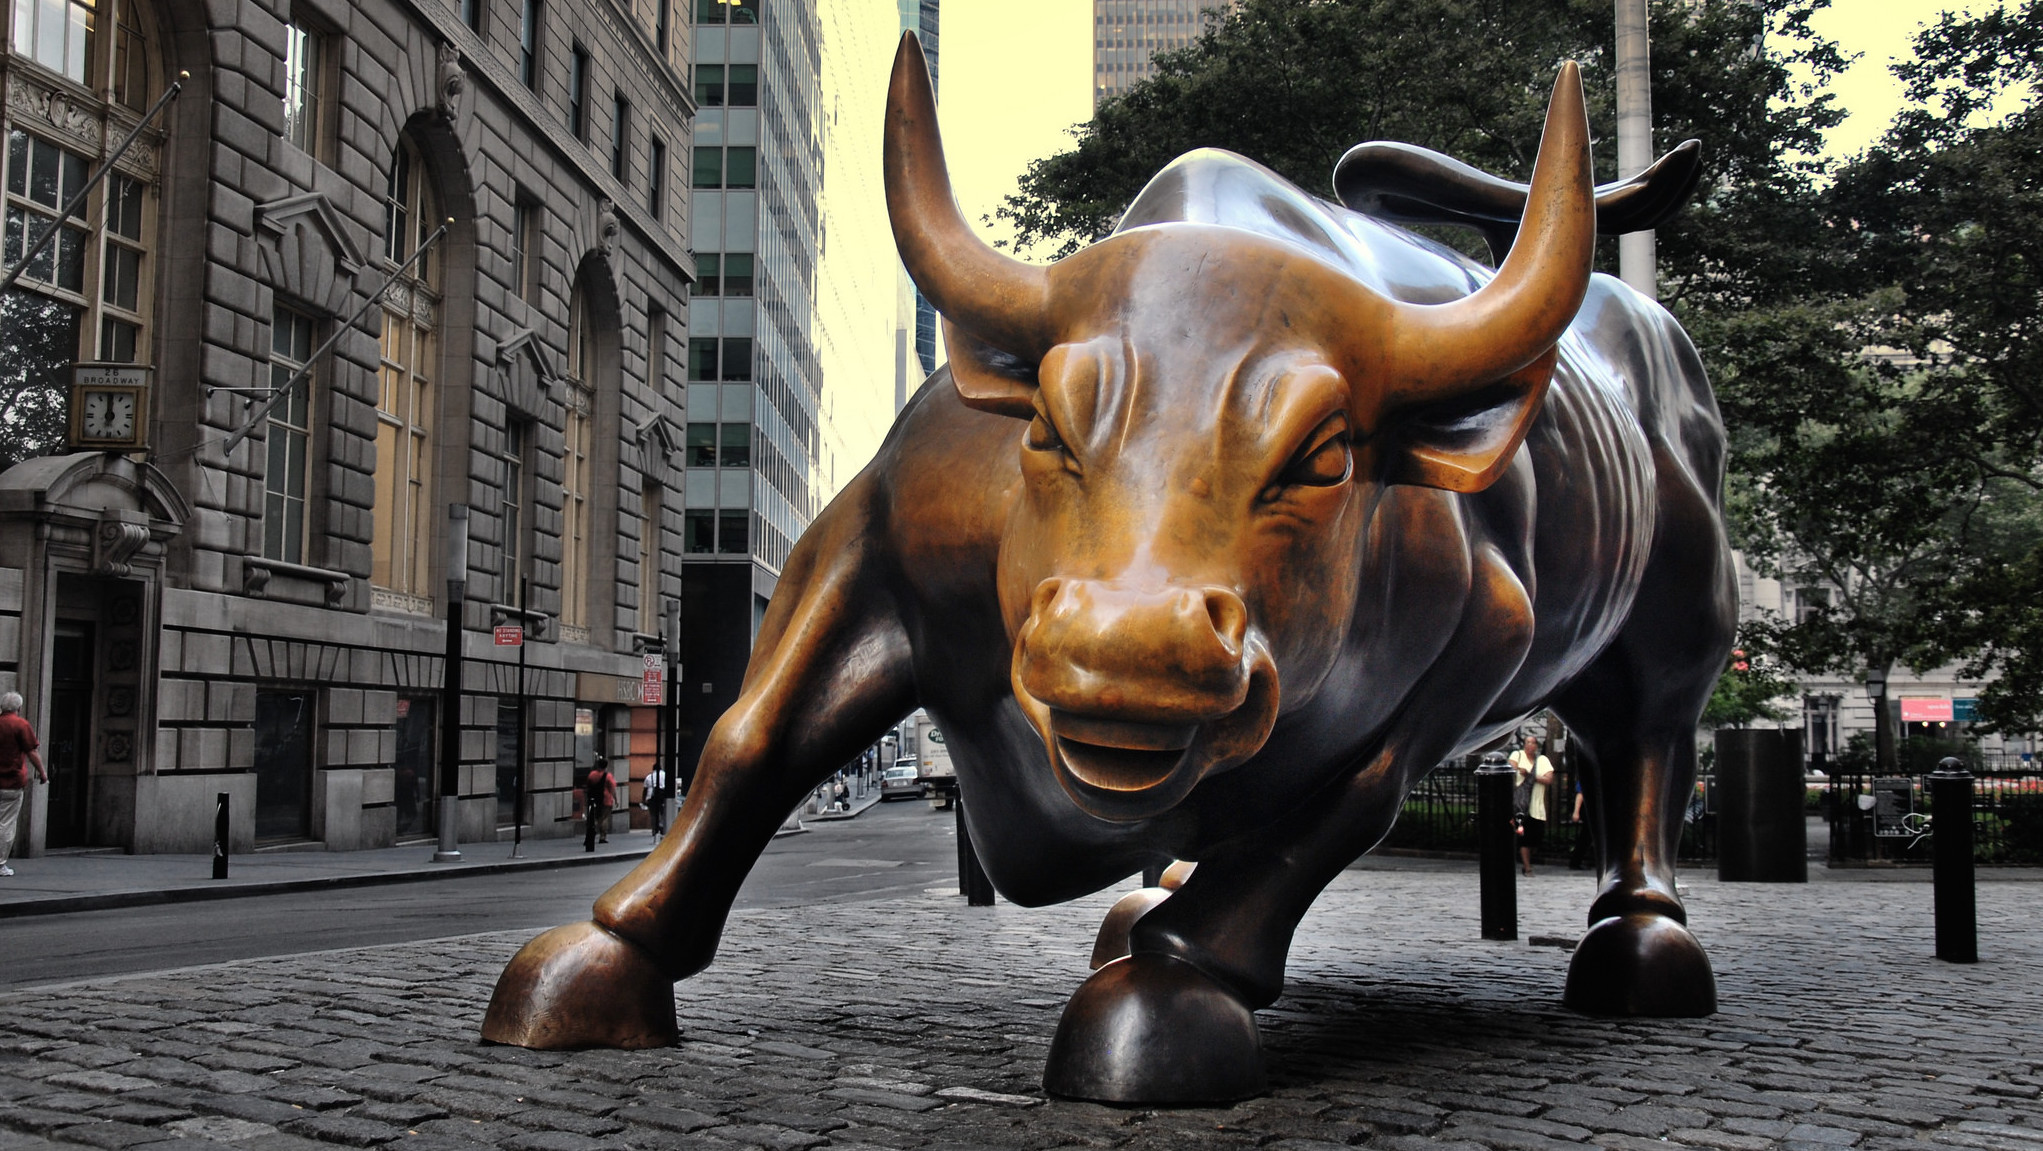 Charging Bull sculpture on Wall Street. Photo: Sam valadi/flickr